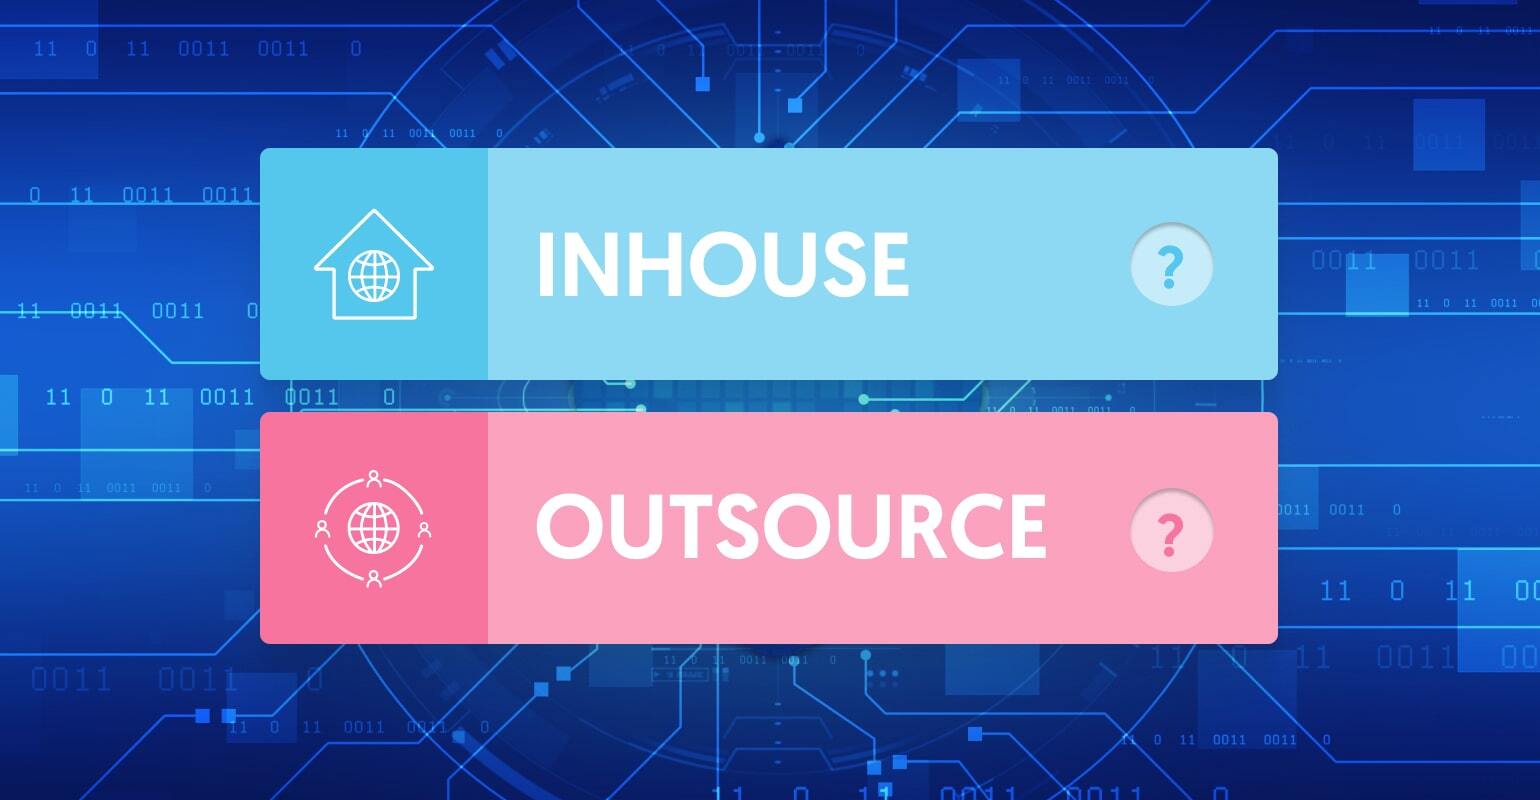 IT departments inhouse vs outsource